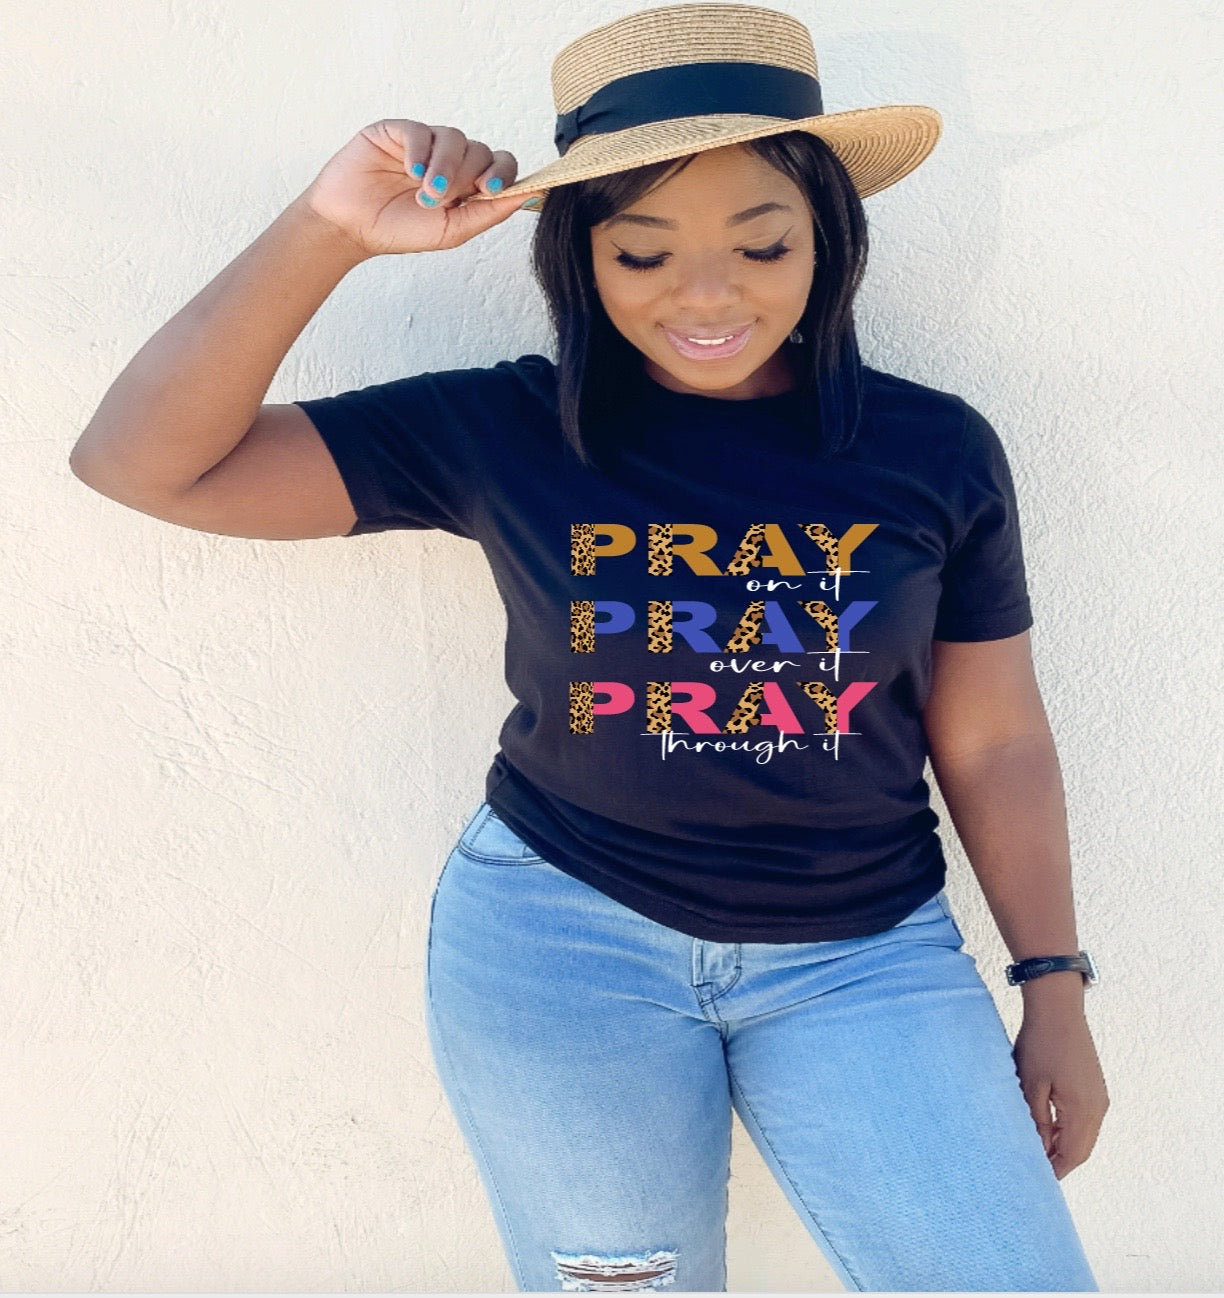 PRAY ON IT,PRAY OVER IT,PRAY THROUGH IT. – teamd2d